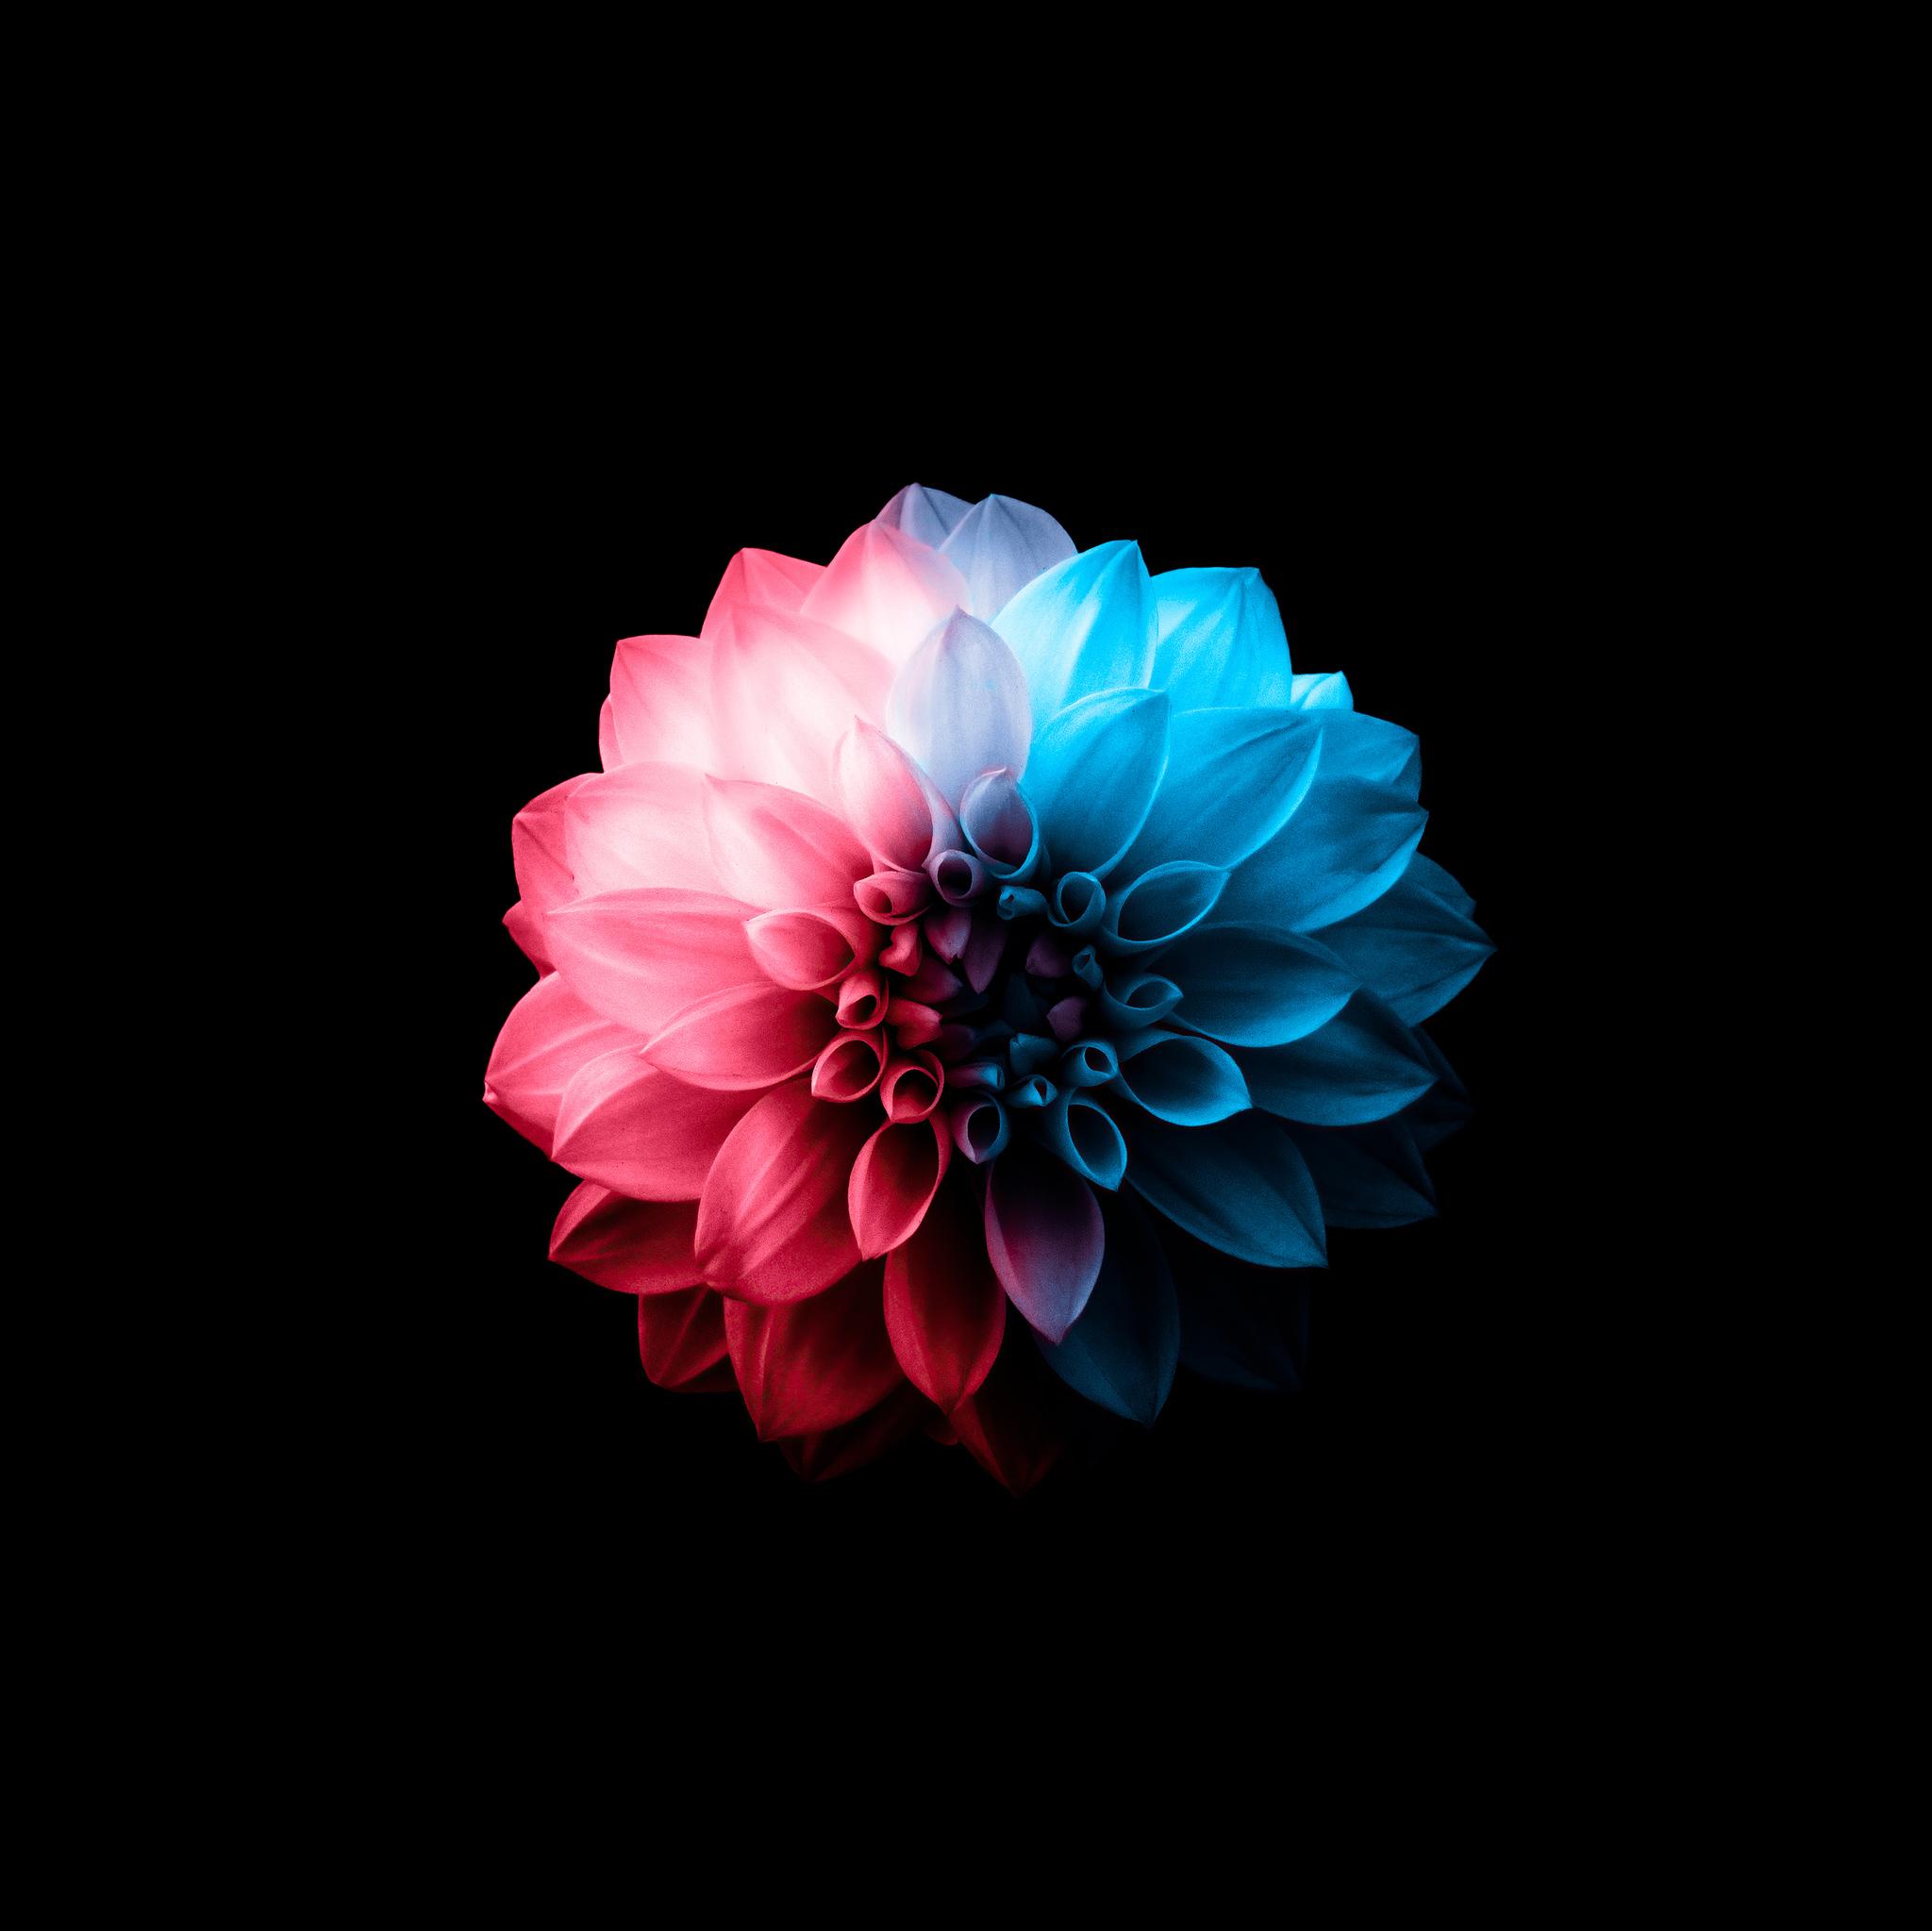 Flower Oled Dark 5k iPad Air HD 4k Wallpaper Image